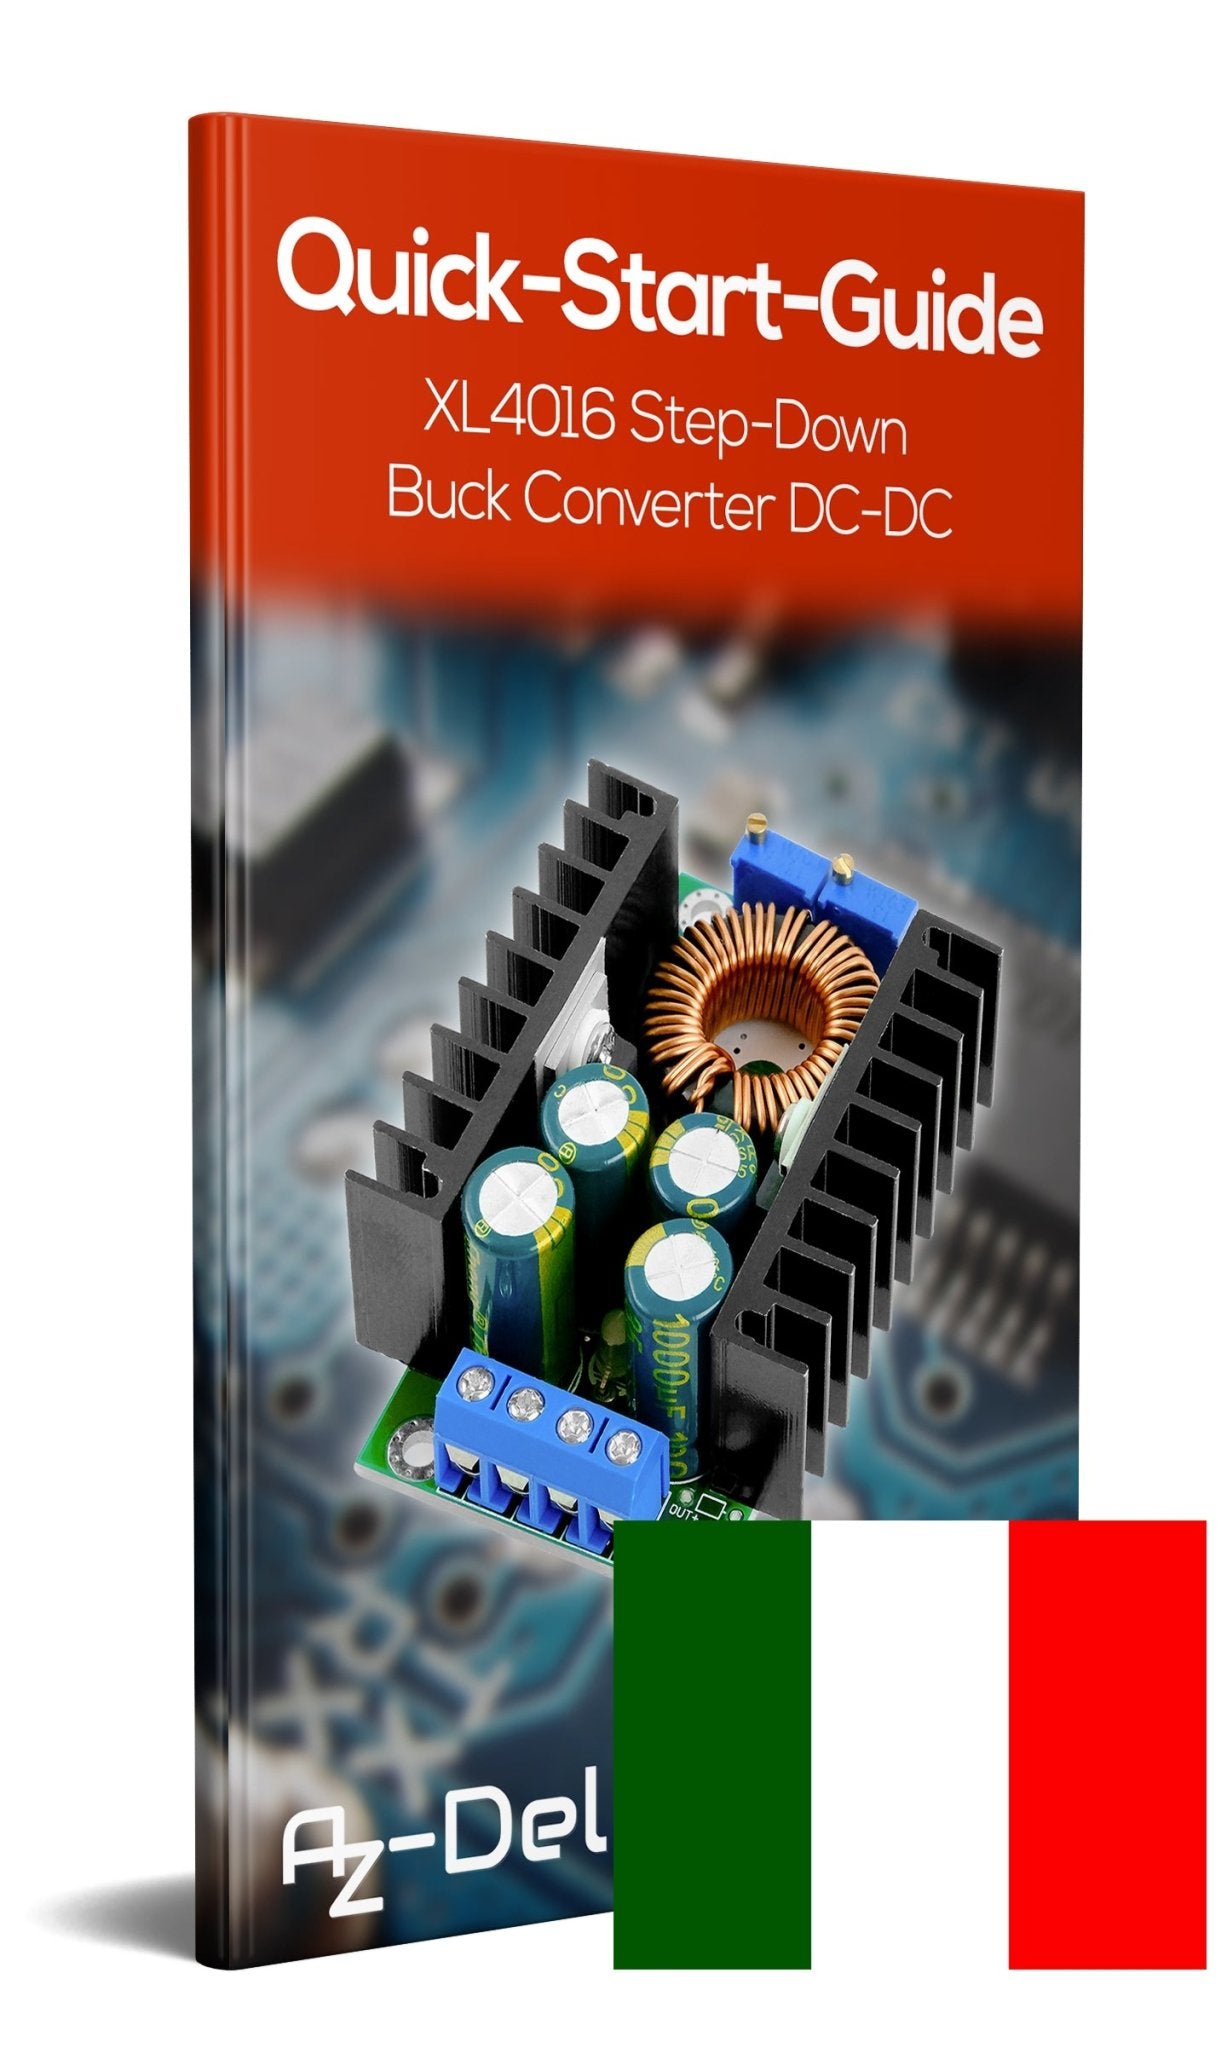 XL4016 Step-Down Buck Converter DC-DC - AZ-Delivery